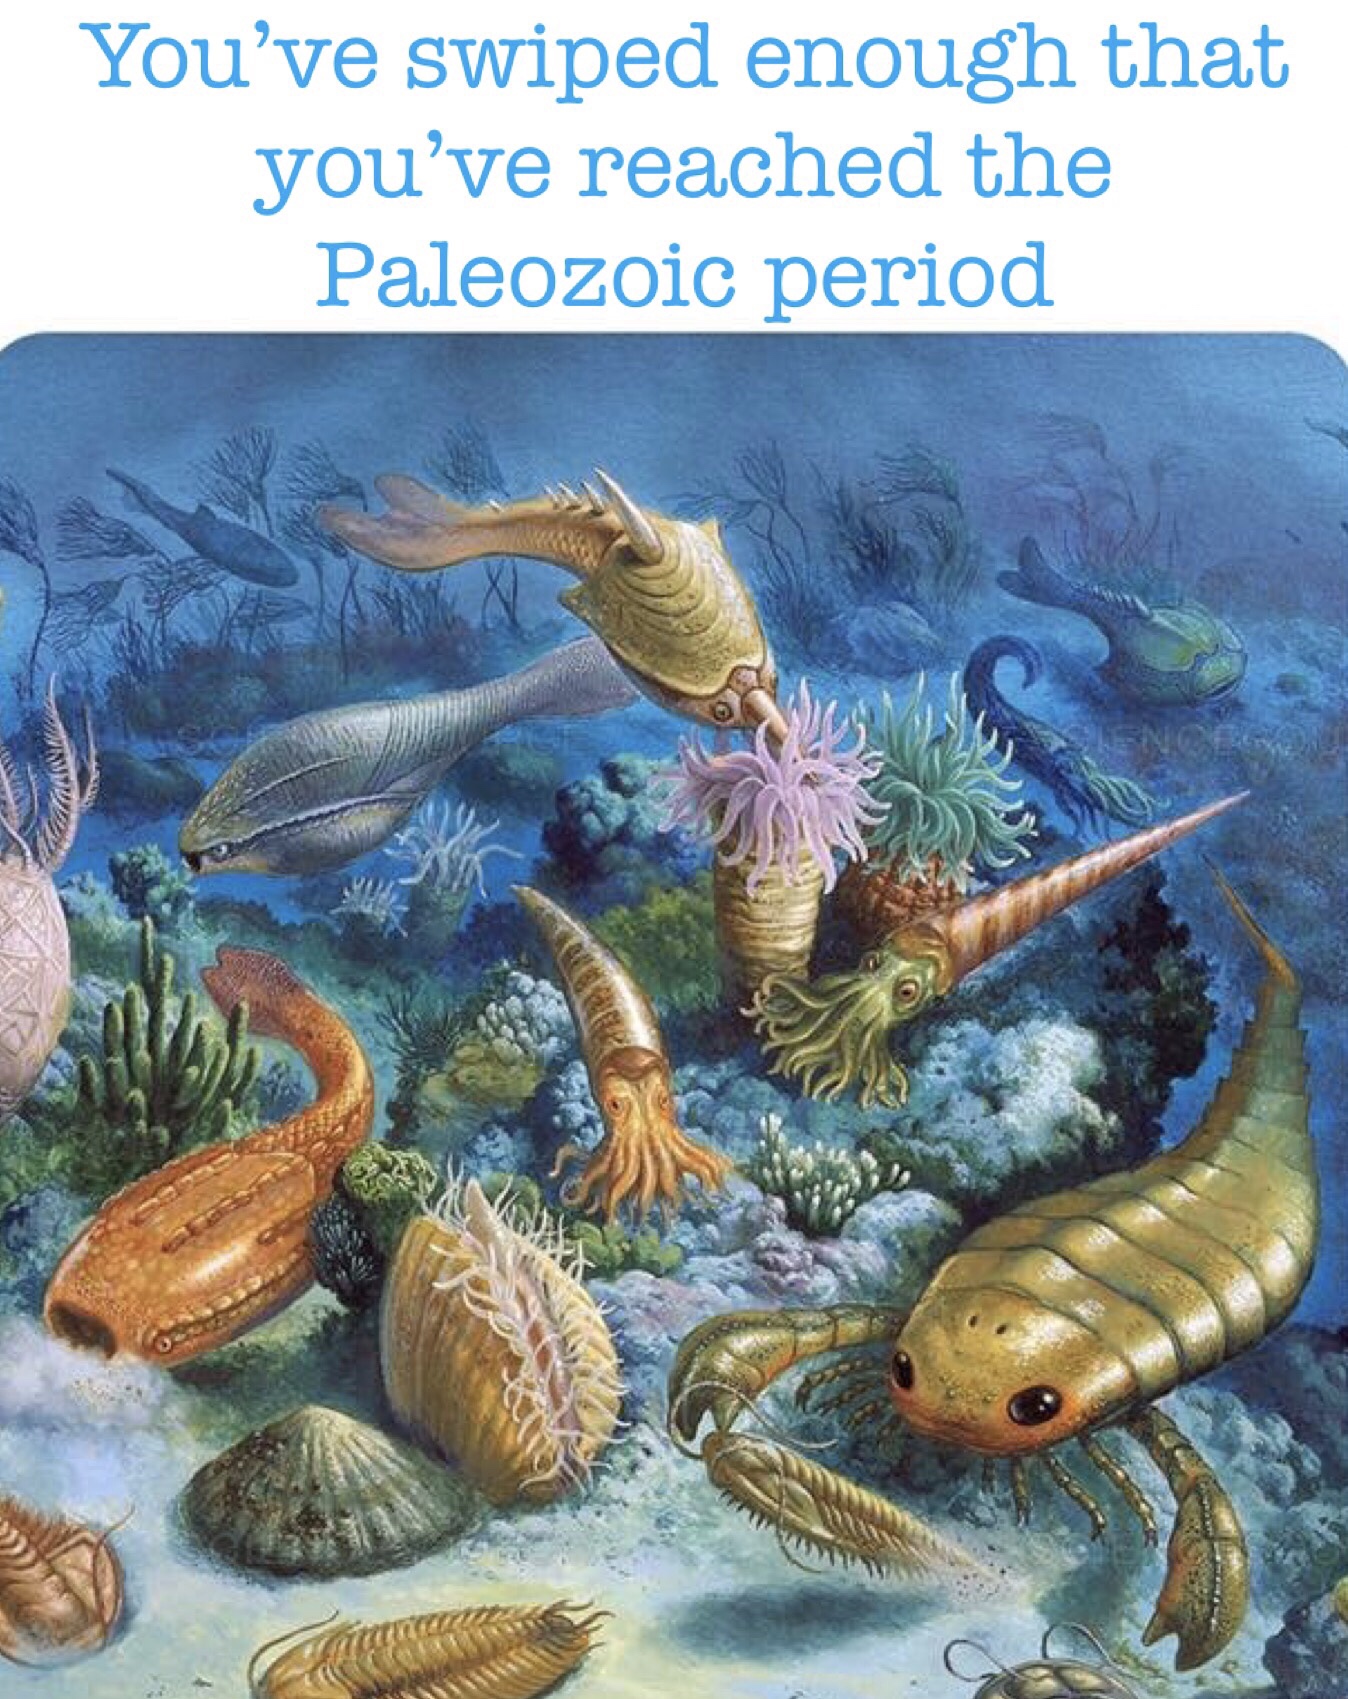 paleozoic era - You've swiped enough that you've reached the Paleozoic period